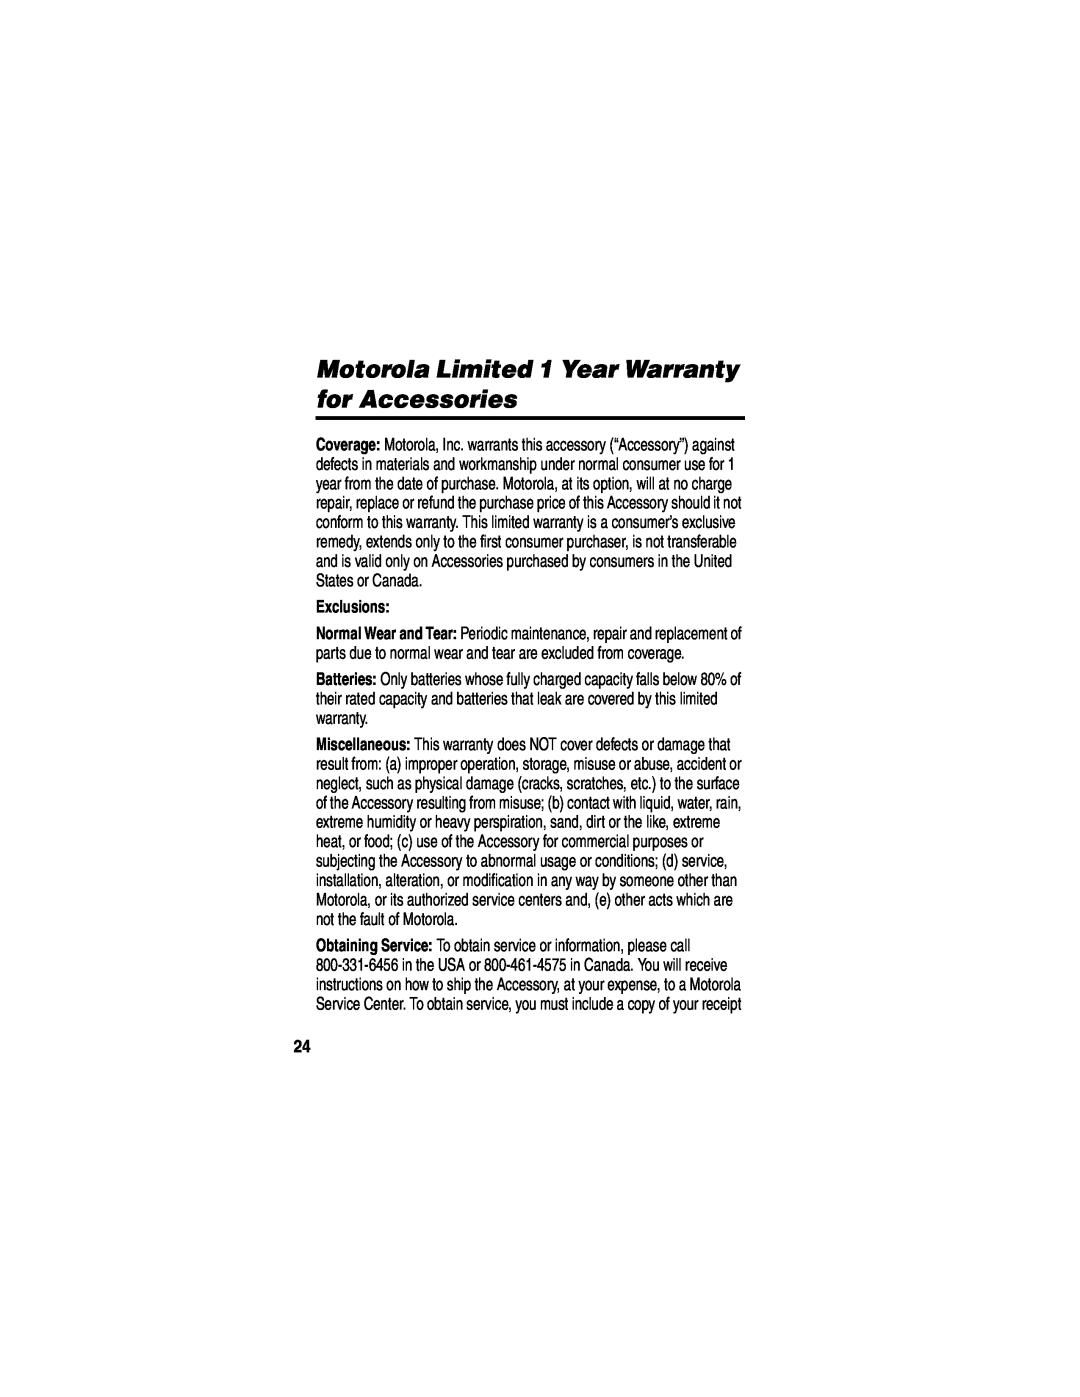 Motorola HF850 manual Motorola Limited 1 Year Warranty for Accessories, Exclusions 